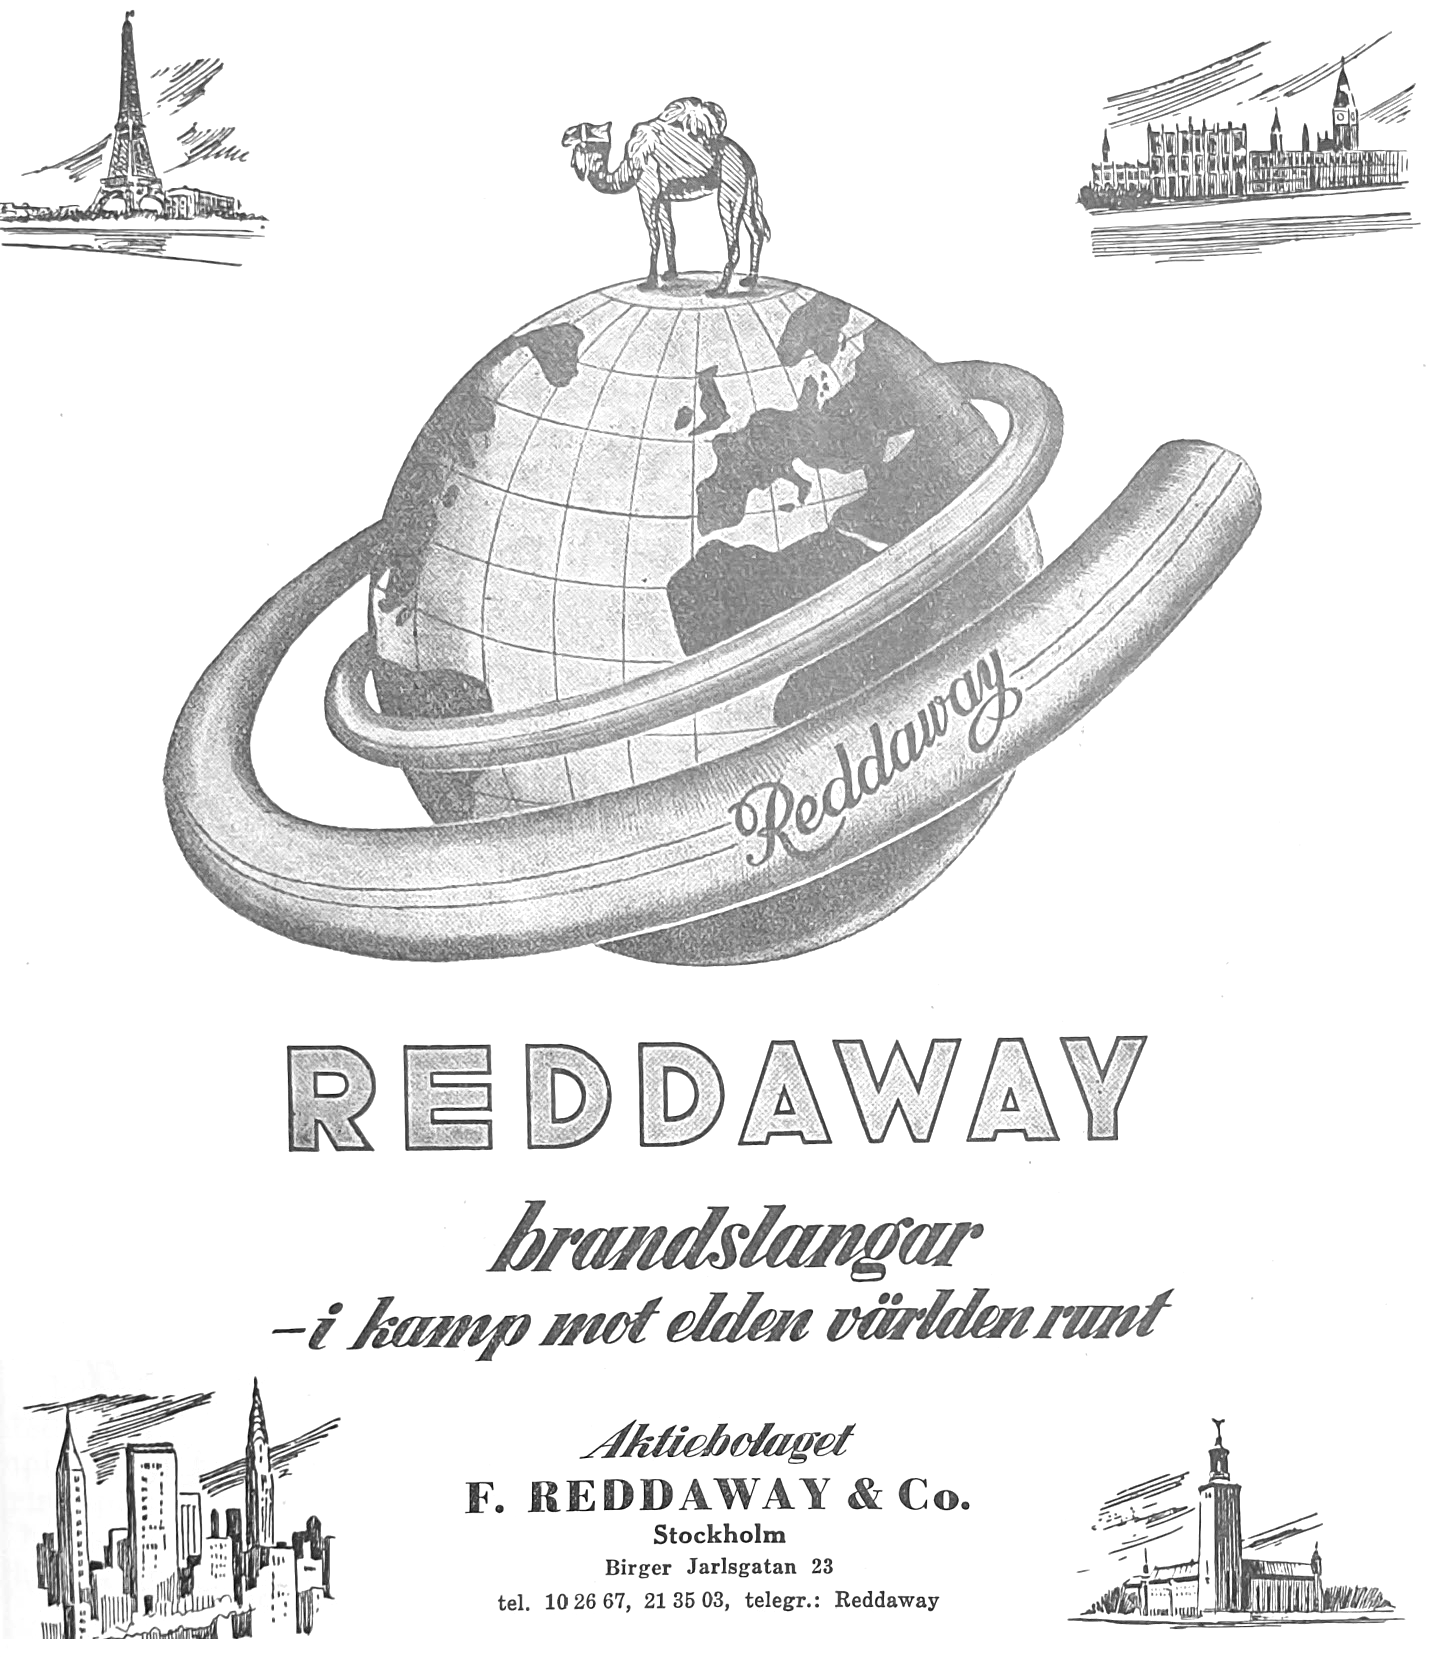 Reddaway